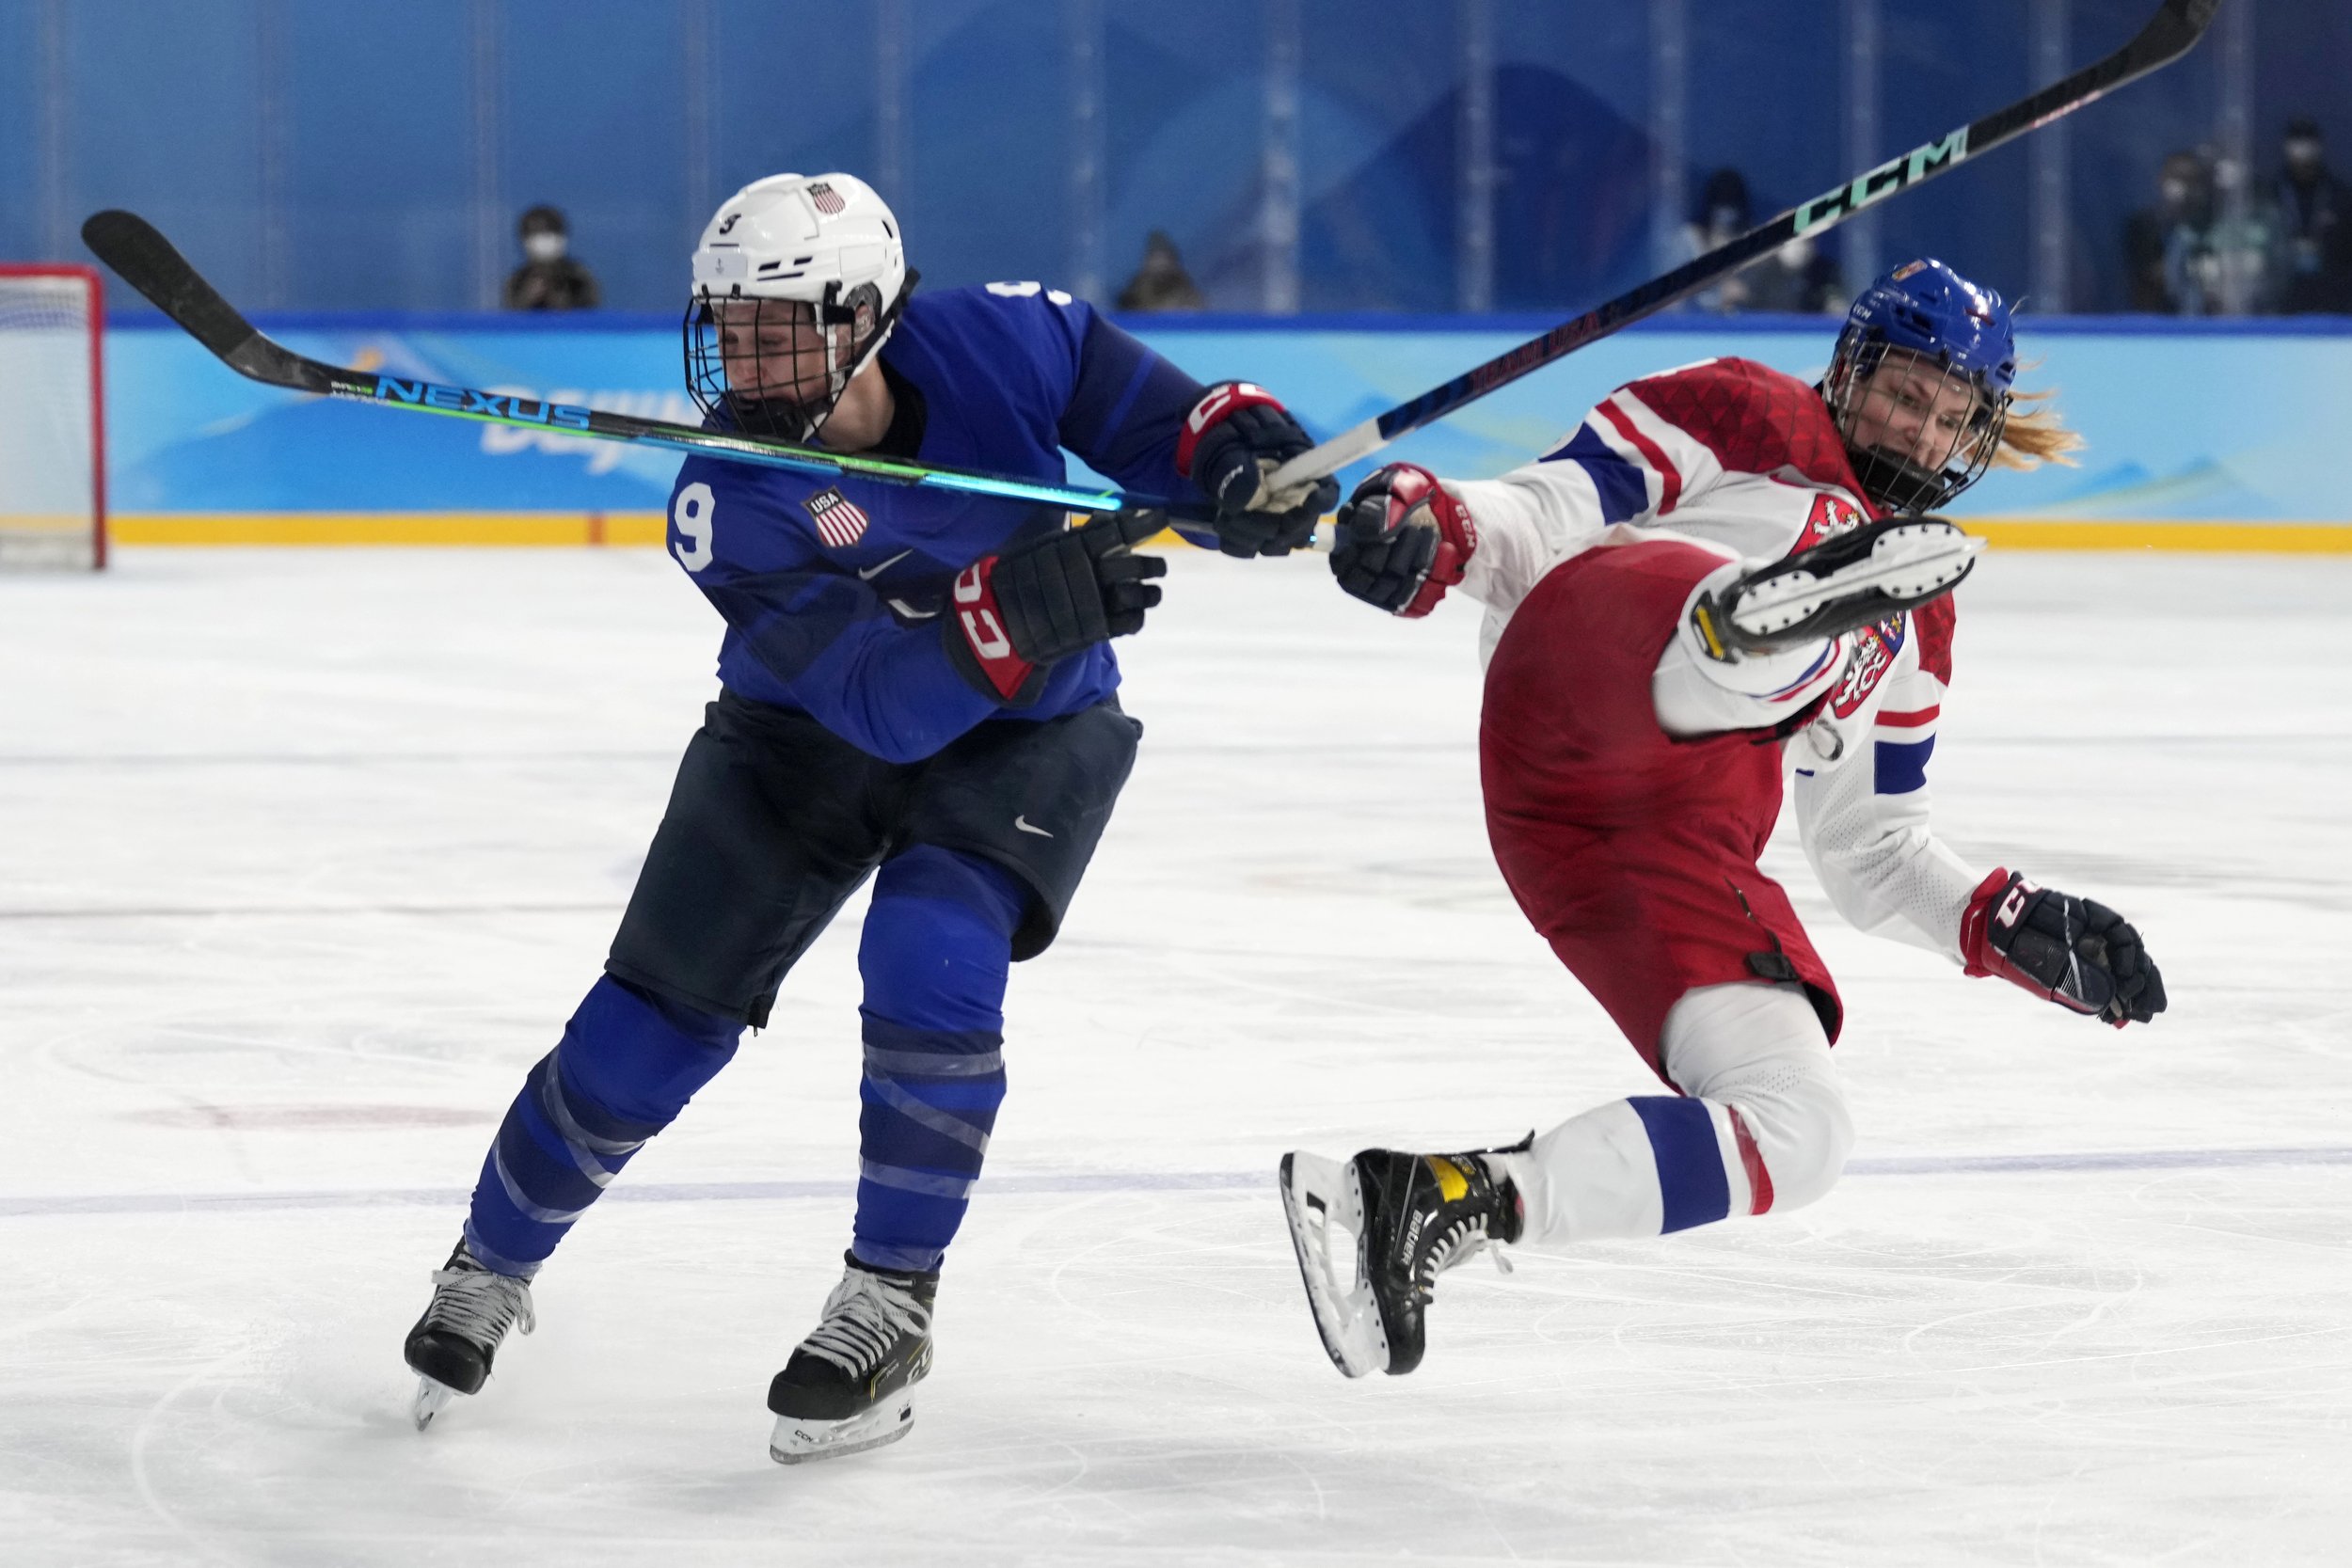  Czech Republic's Daniela Pejsova, right, falls next to United States' Megan Bozek (9) during a women's quarterfinal hockey game at the 2022 Winter Olympics, Friday, Feb. 11, 2022, in Beijing. (AP Photo/Petr David Josek) 